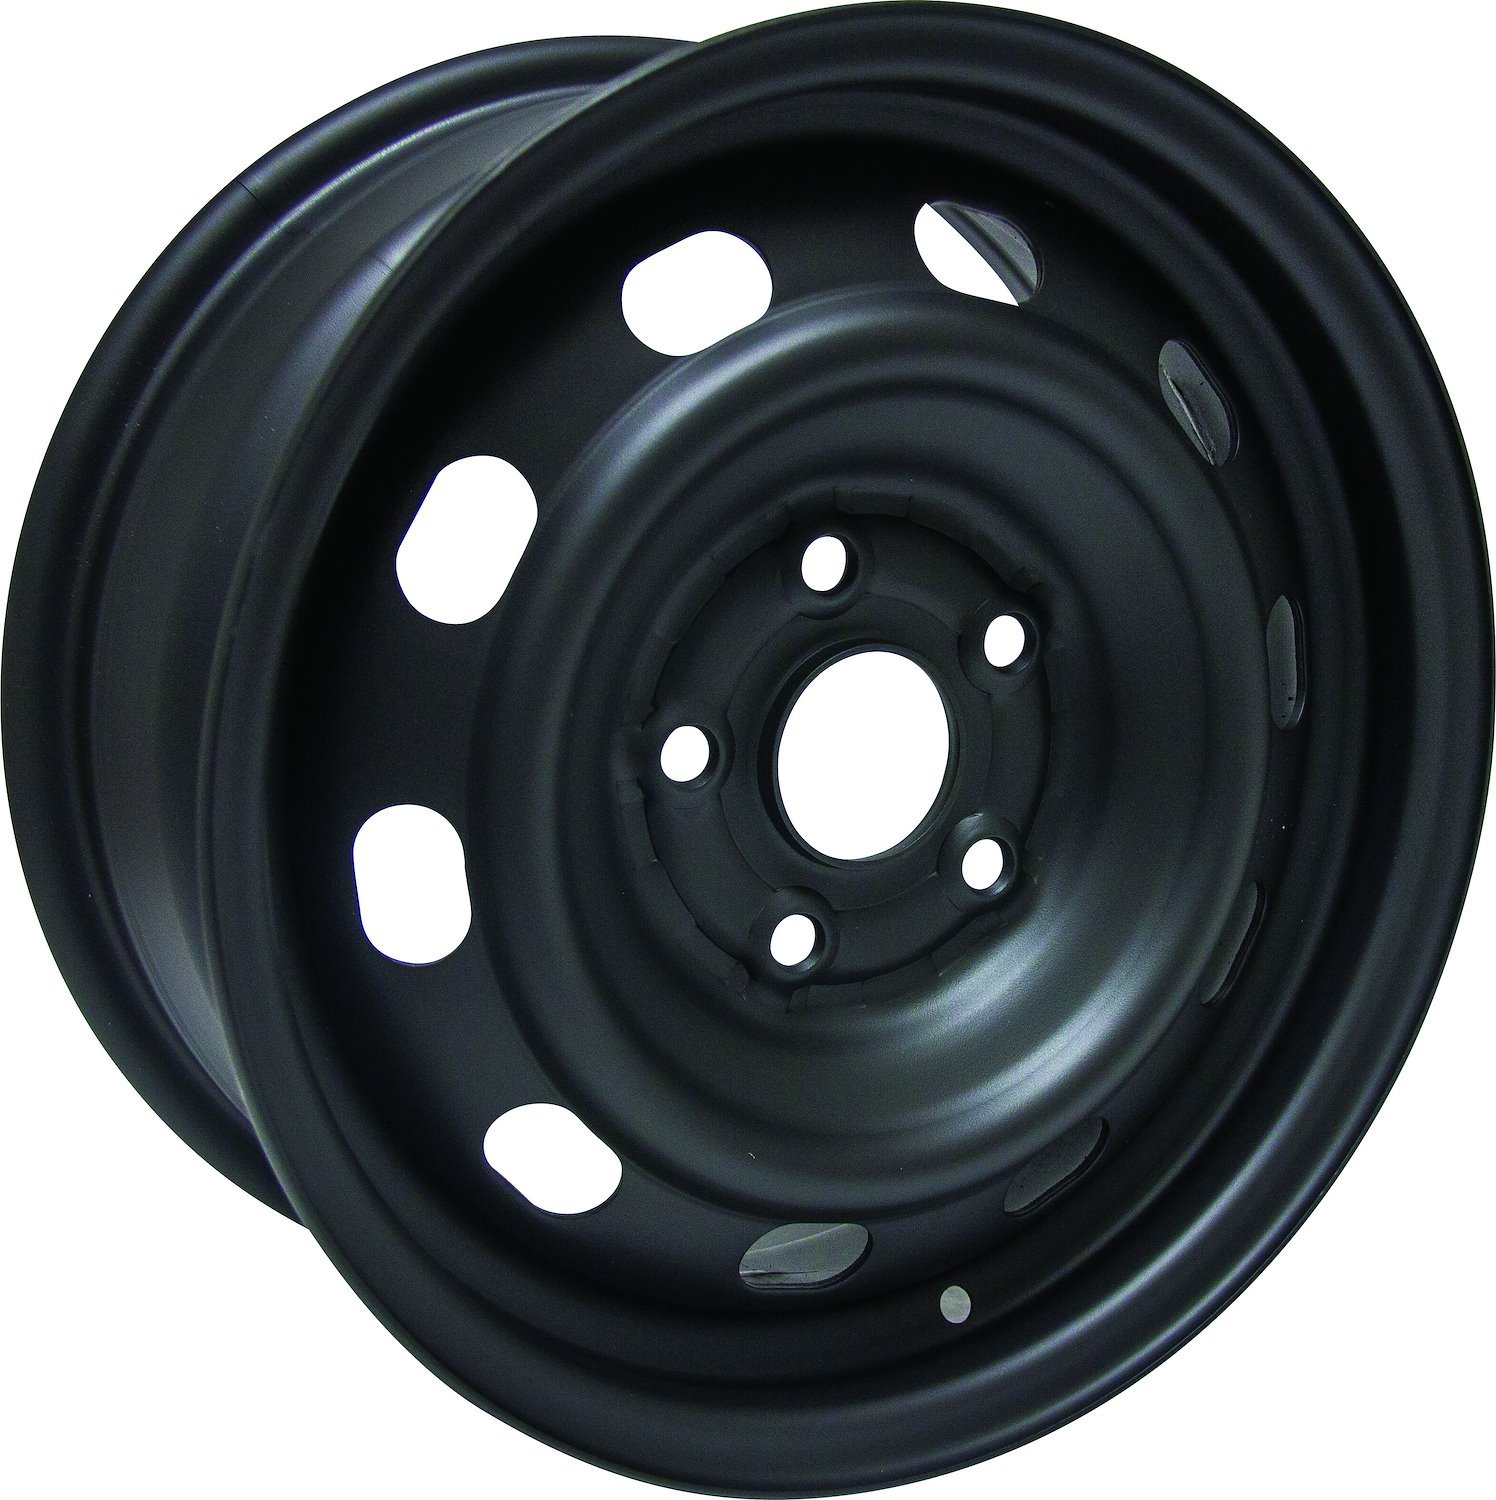 X45160 Steel Wheel [Size: 15" x 6.50"] Black Finish